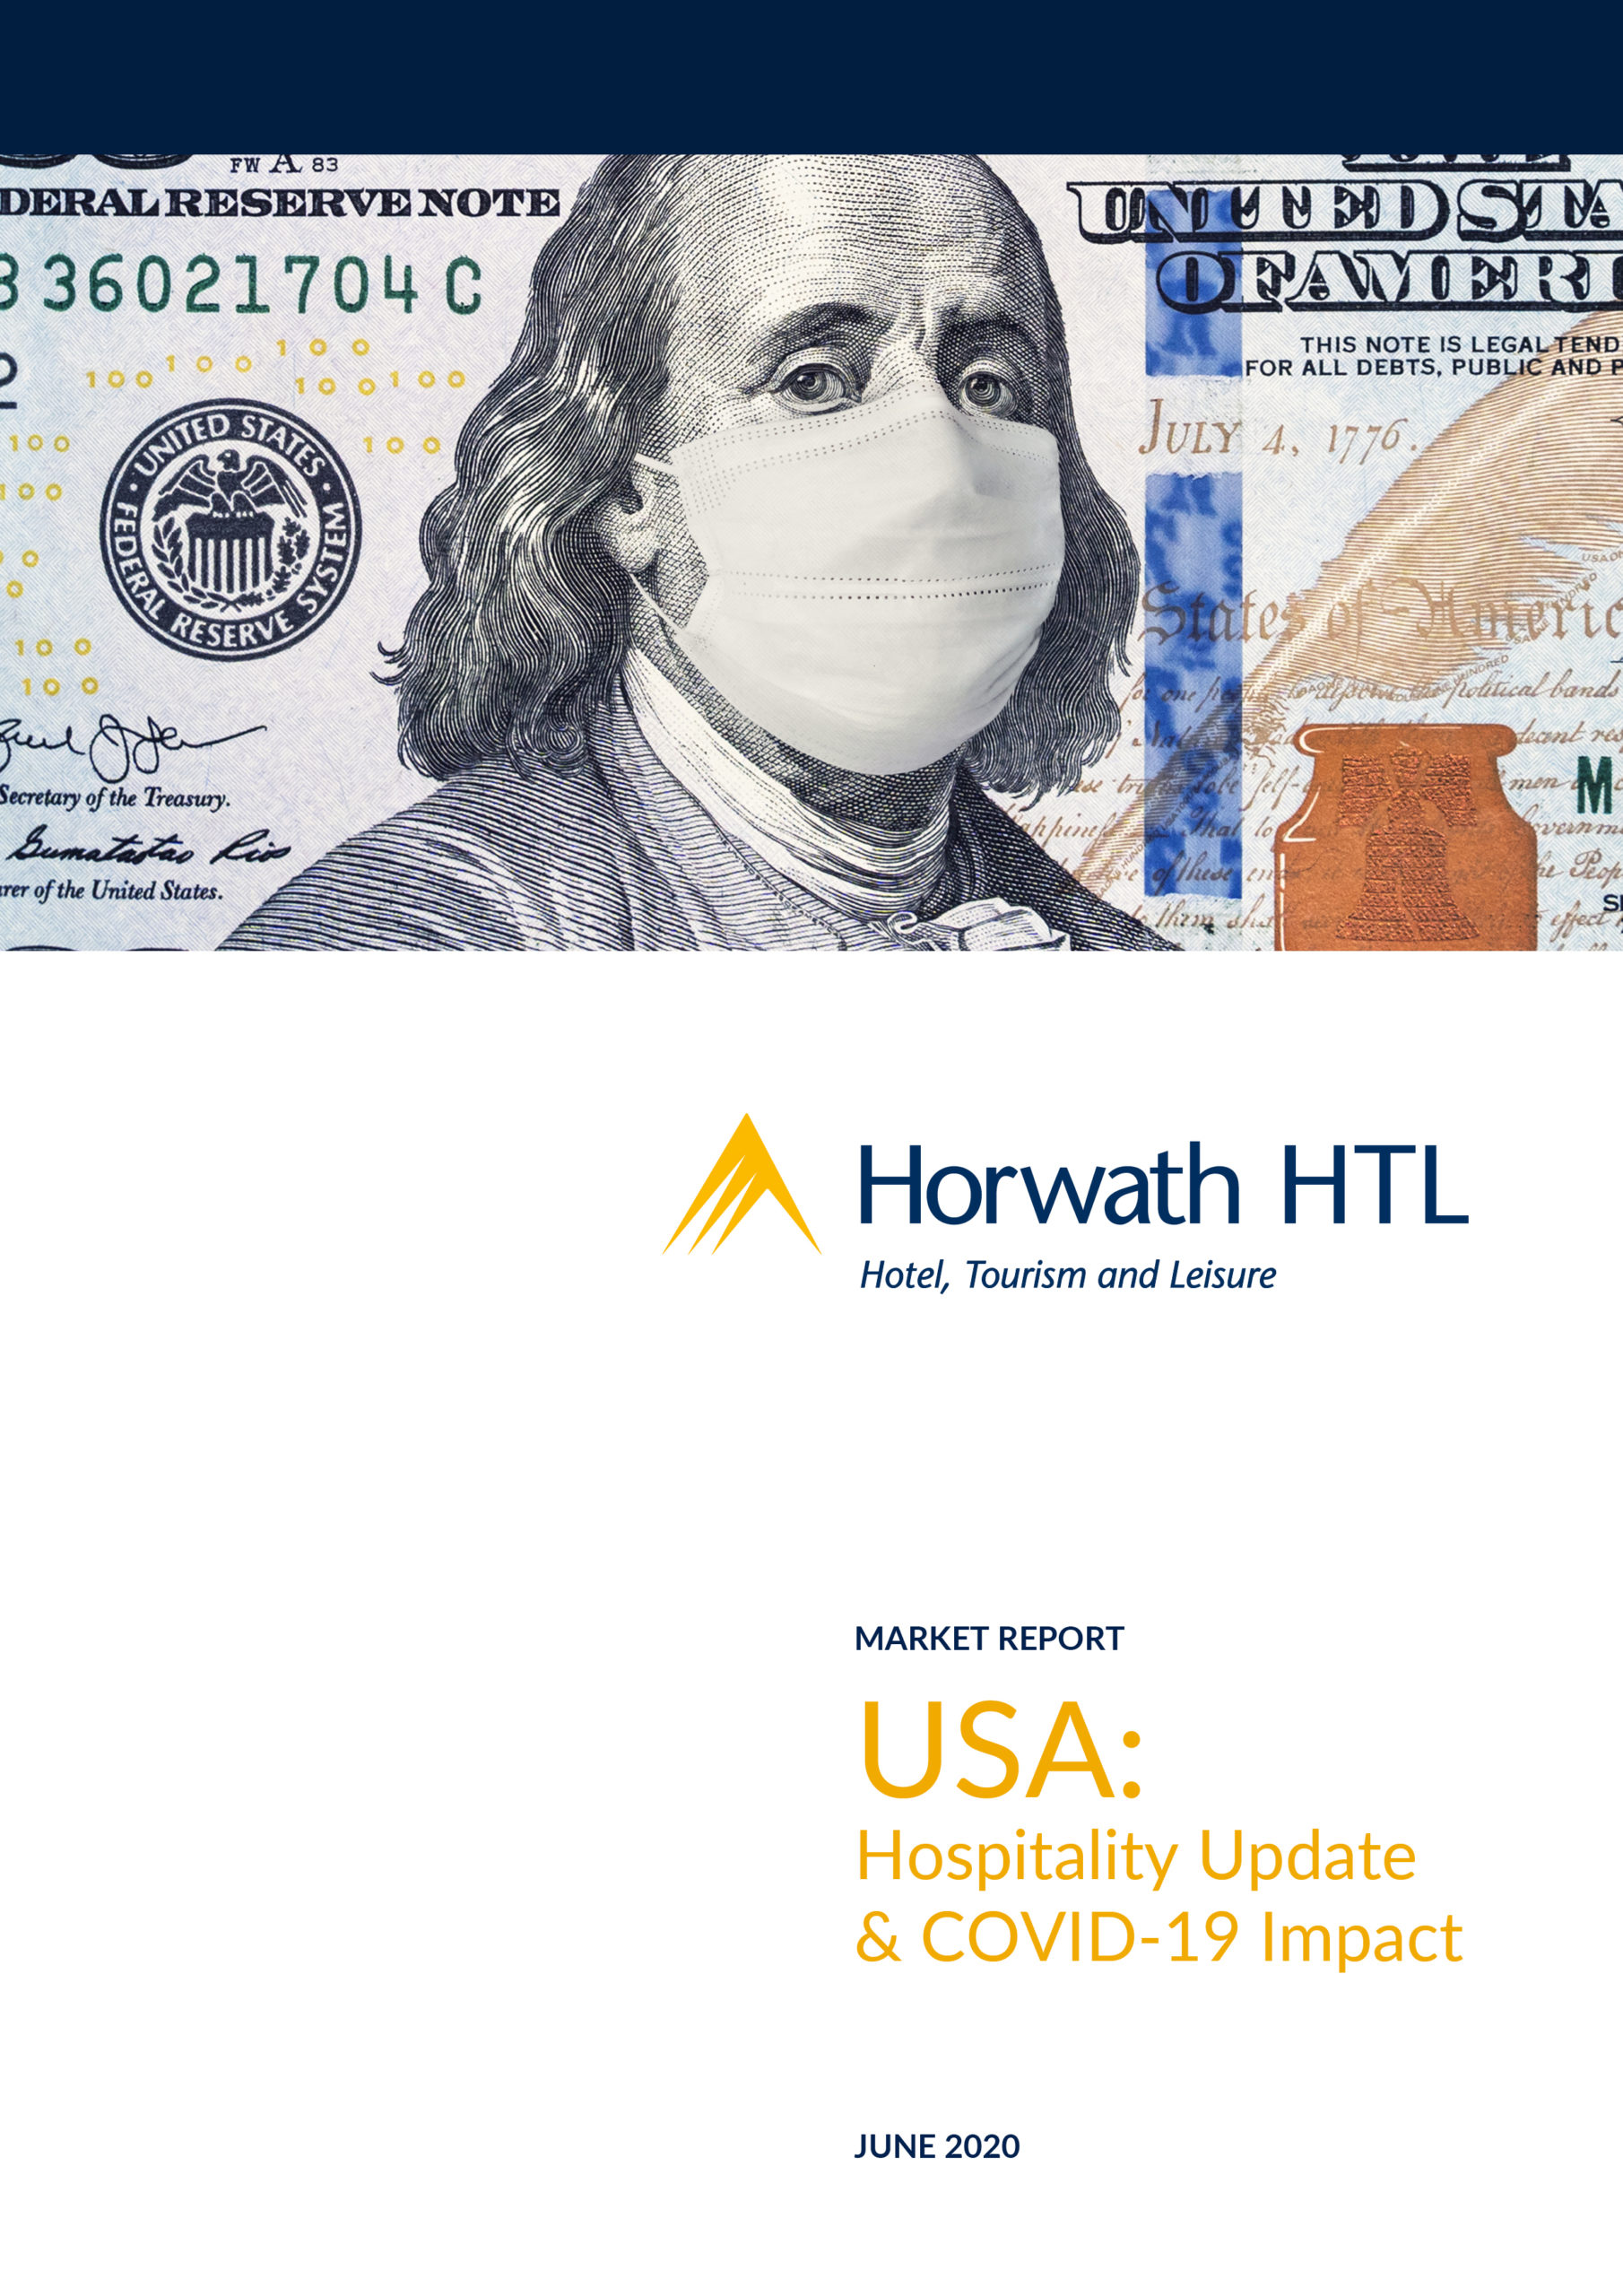 UPDATE: USA Hospitality & COVID-19 Impact